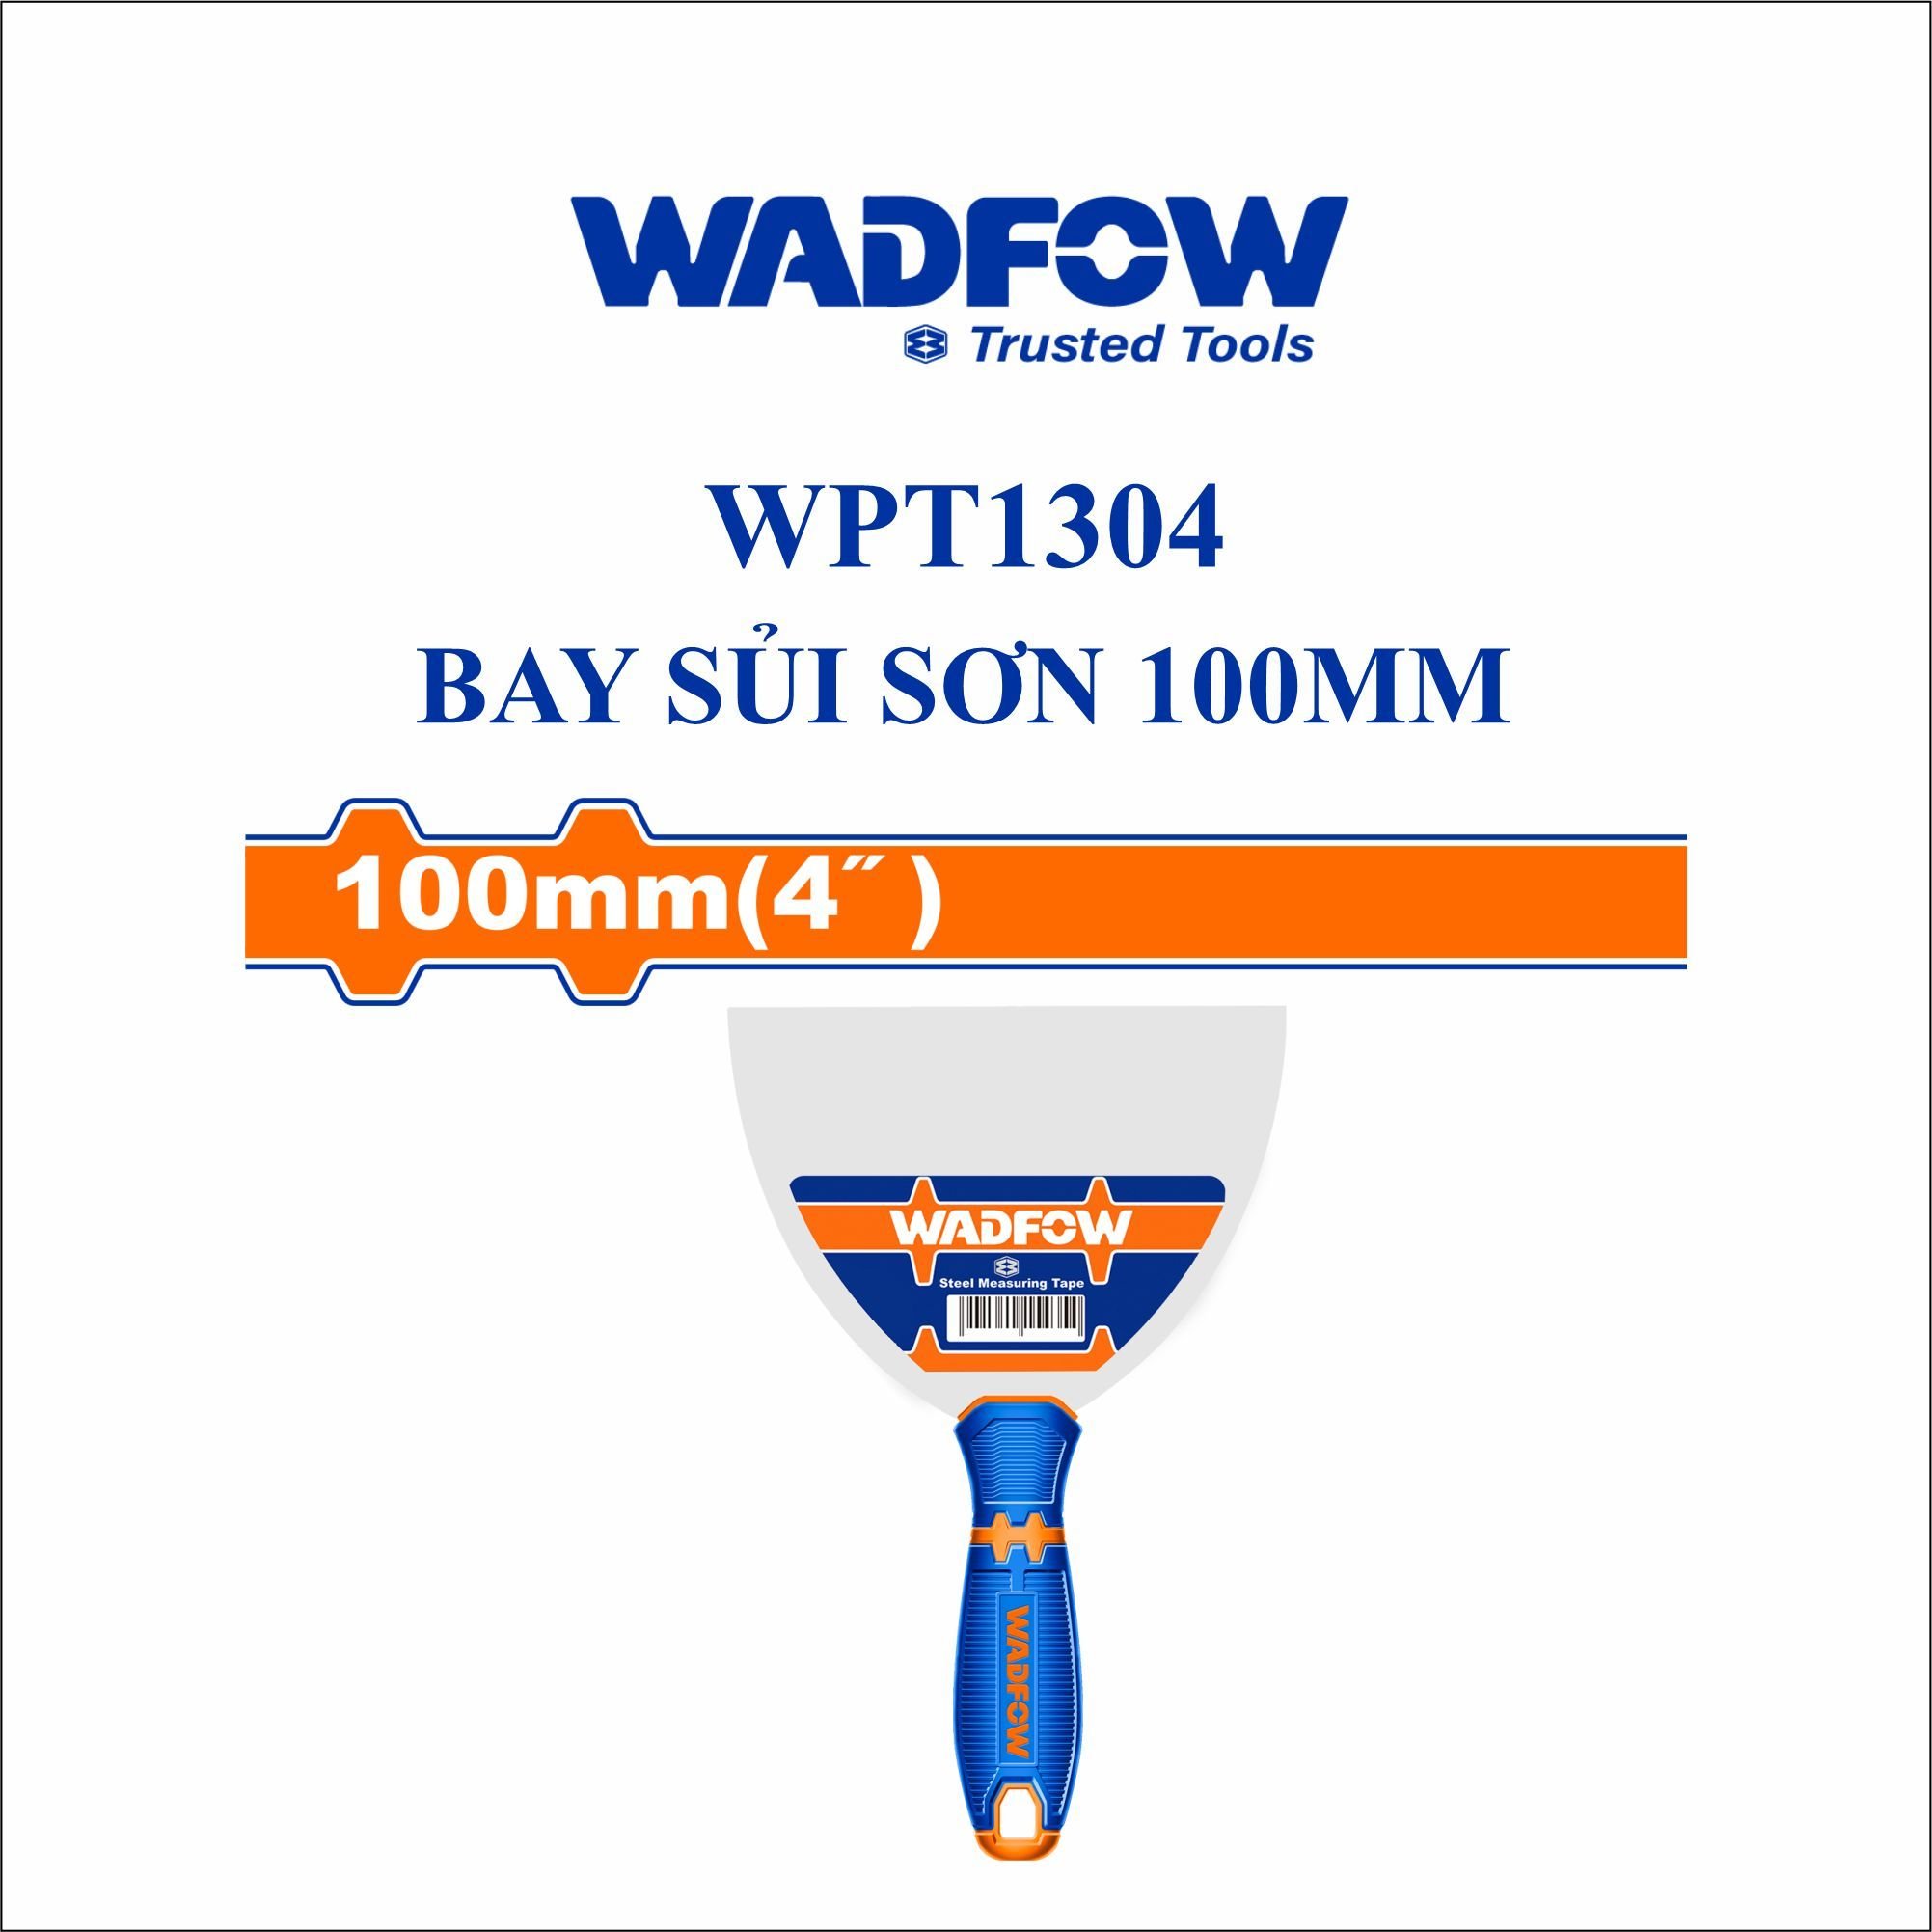  Bay sủi sơn 100mm WADFOW WPT1304 